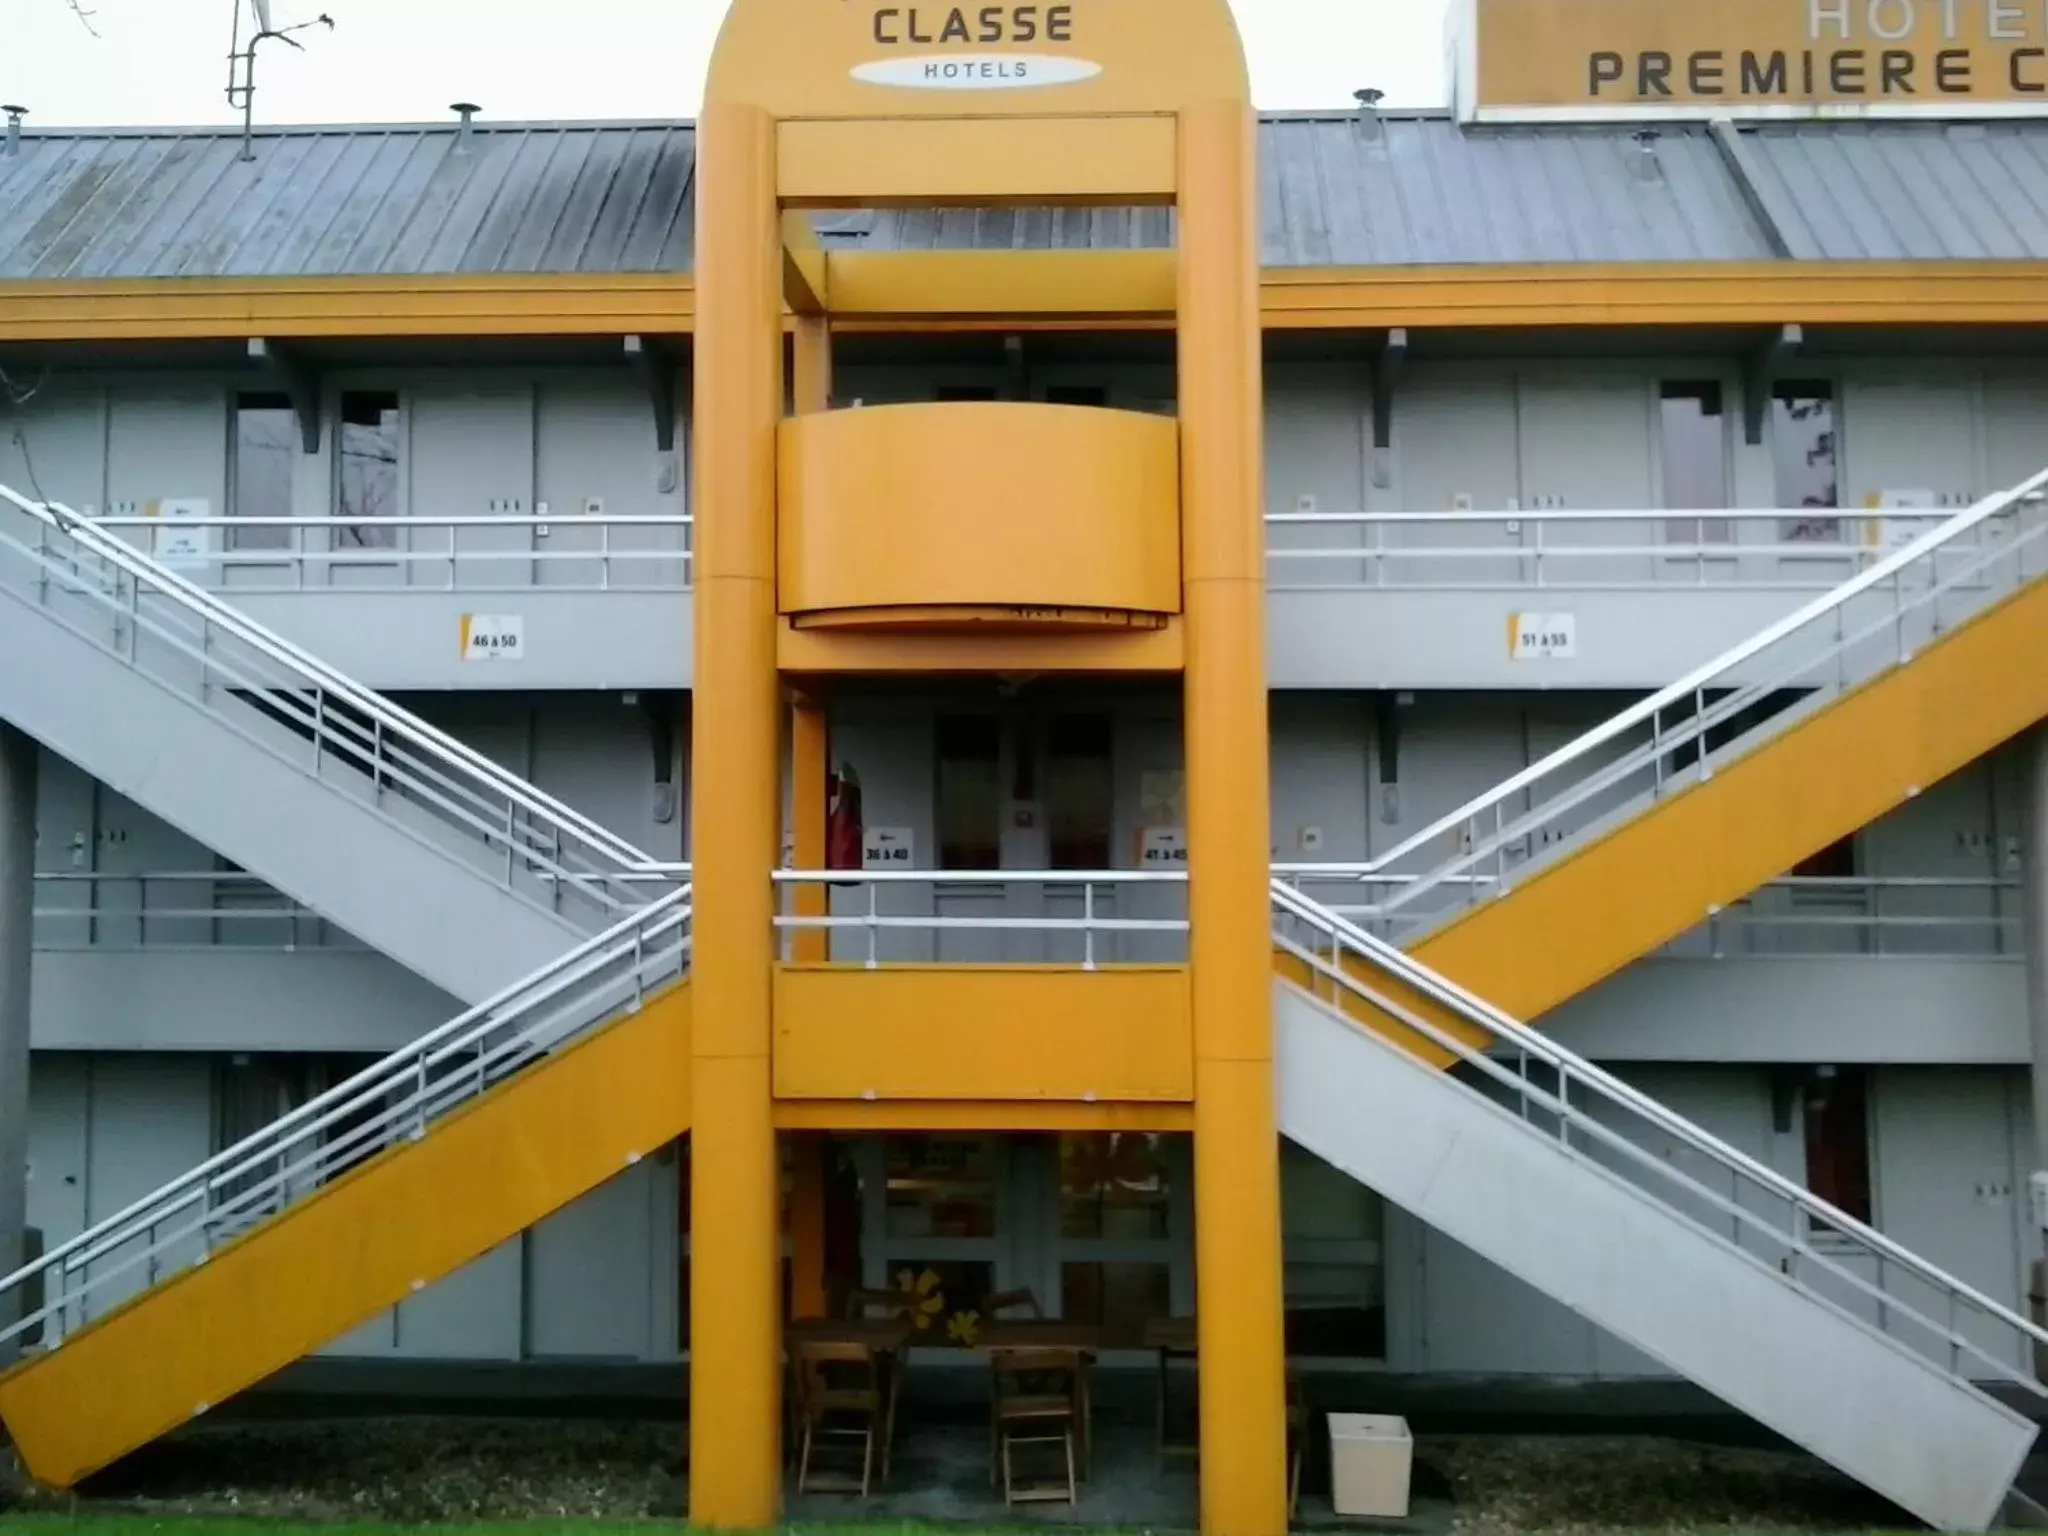 Property Building in Premiere Classe Charleville Mezieres